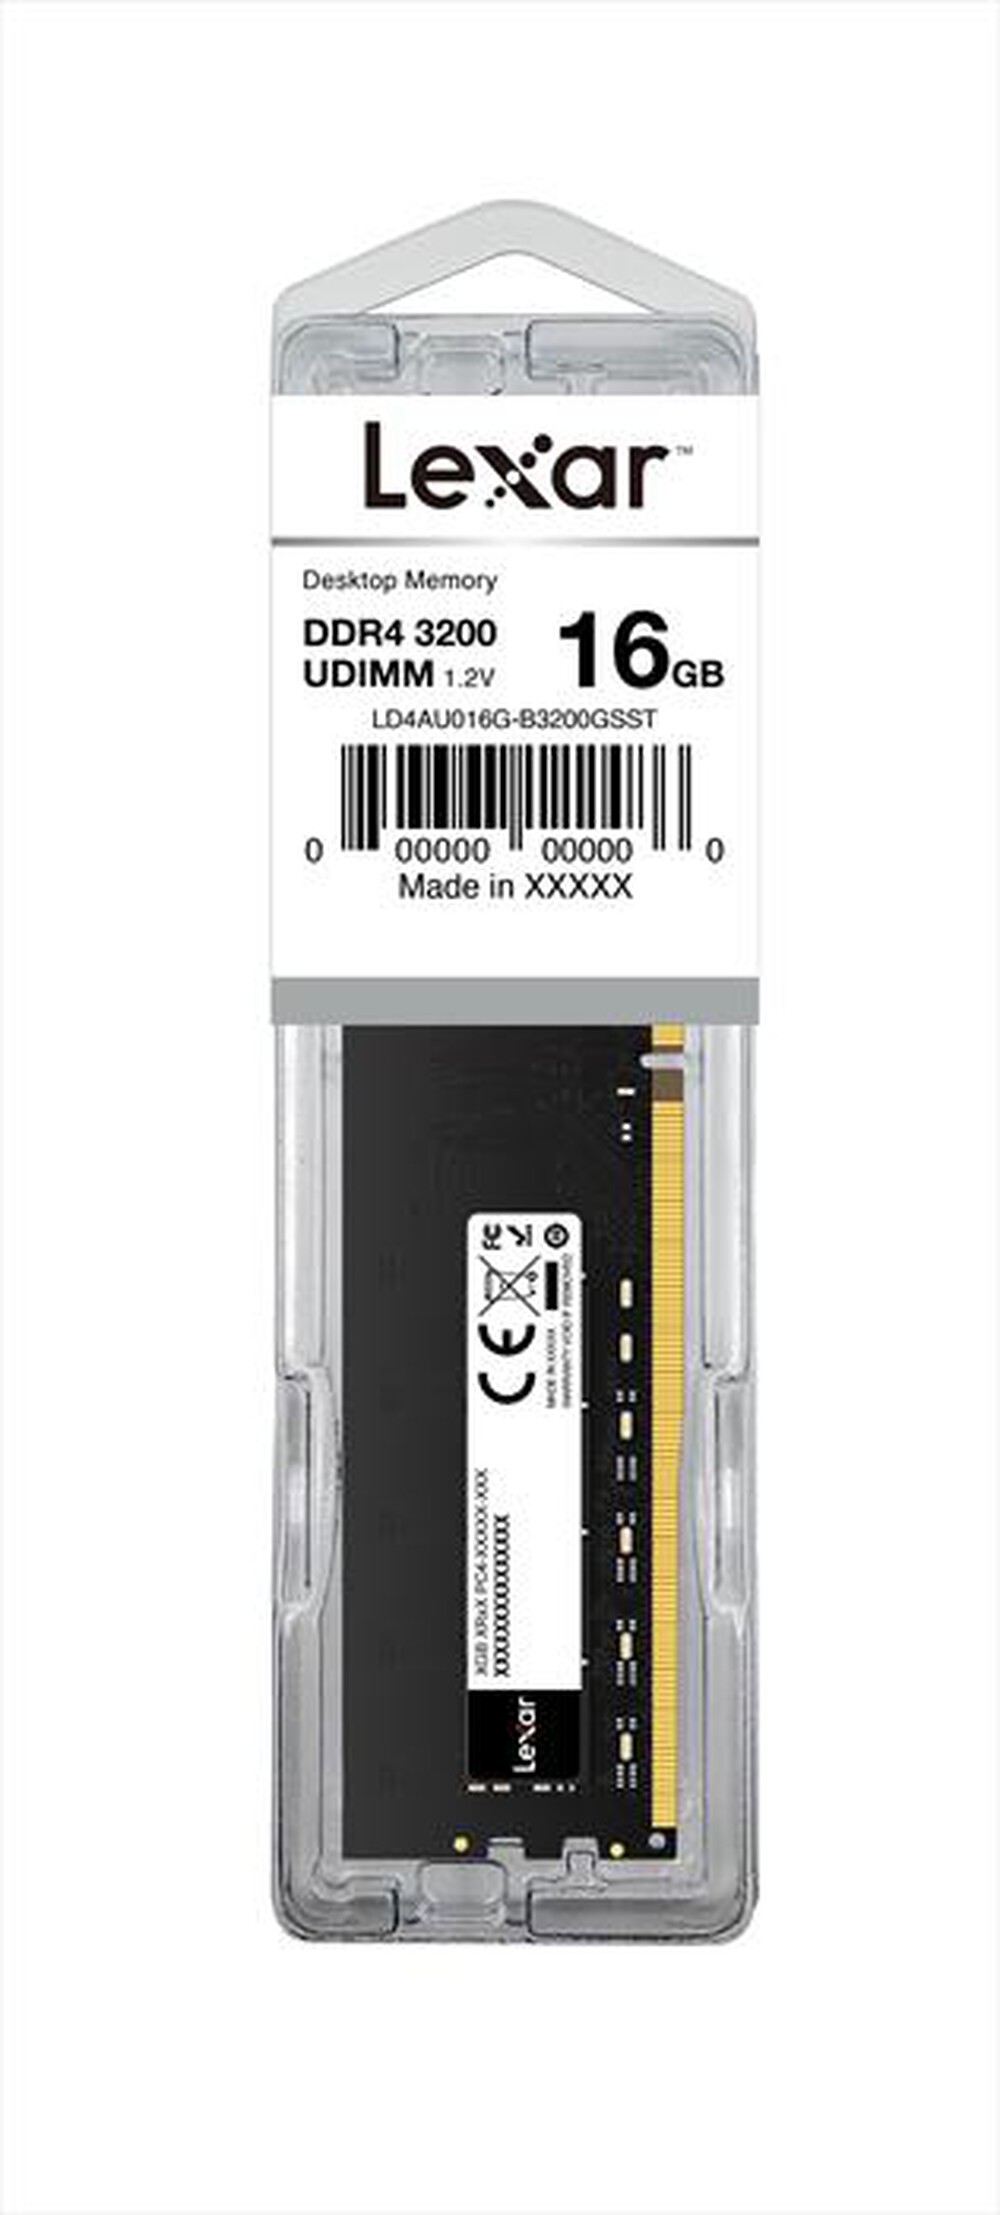 "LEXAR - Memoria per desktop 16GB DDR4 288 PIN-Black"